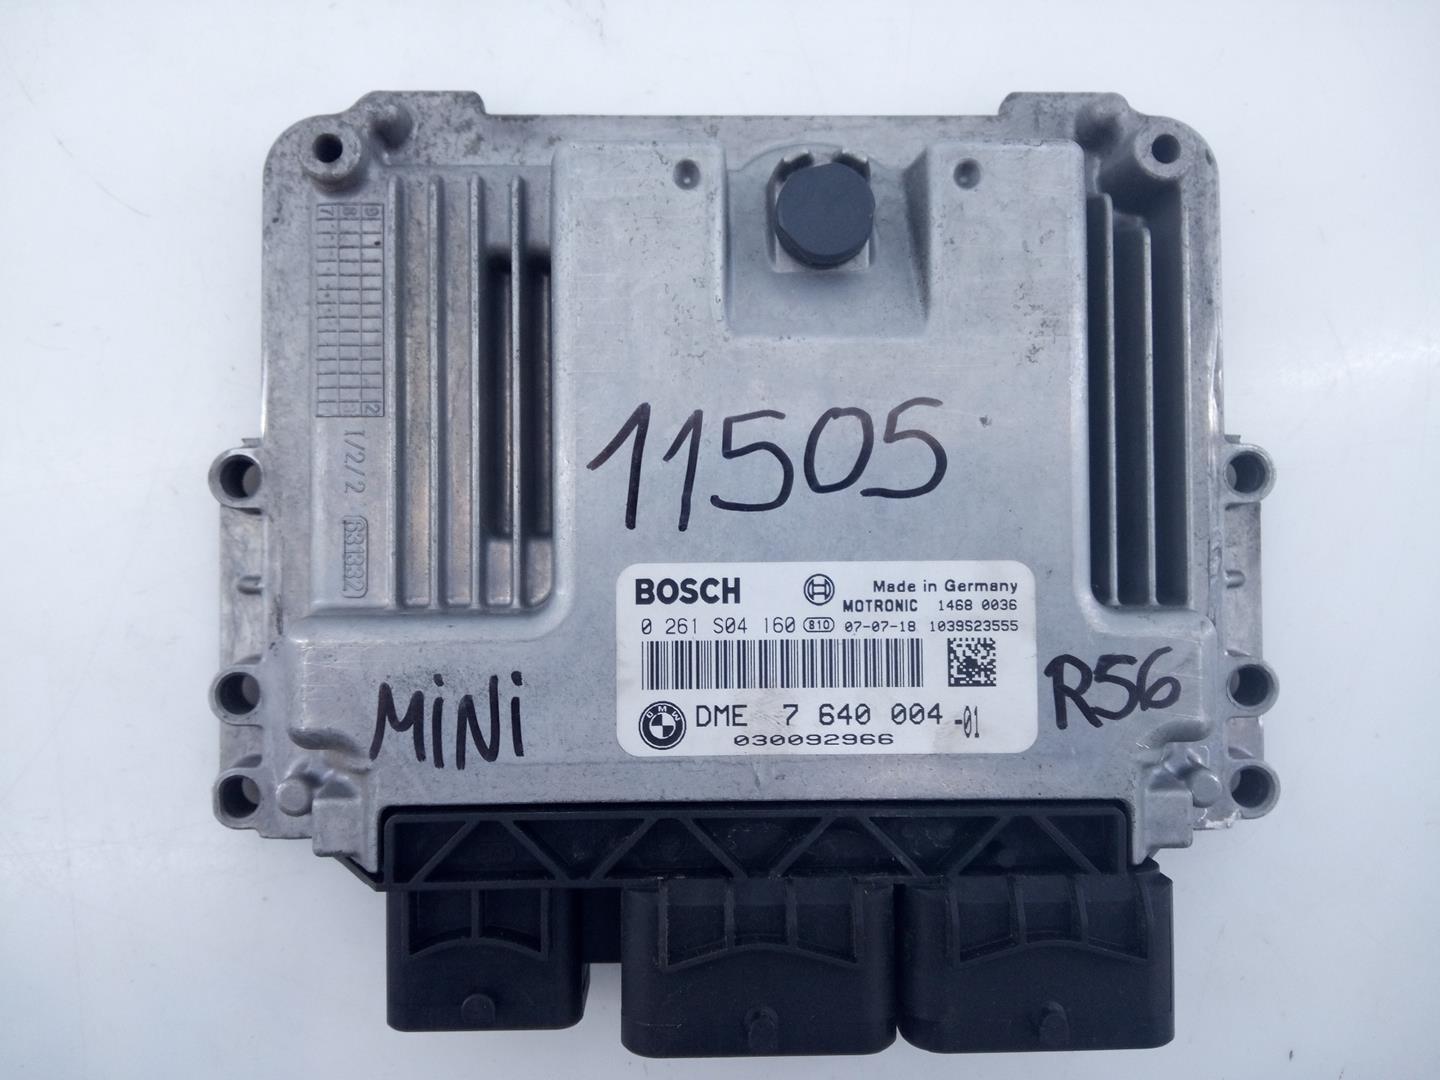 MINI Cooper R56 (2006-2015) Variklio kompiuteris 764000401, 0261S04160, E3-A2-26-1 20584039